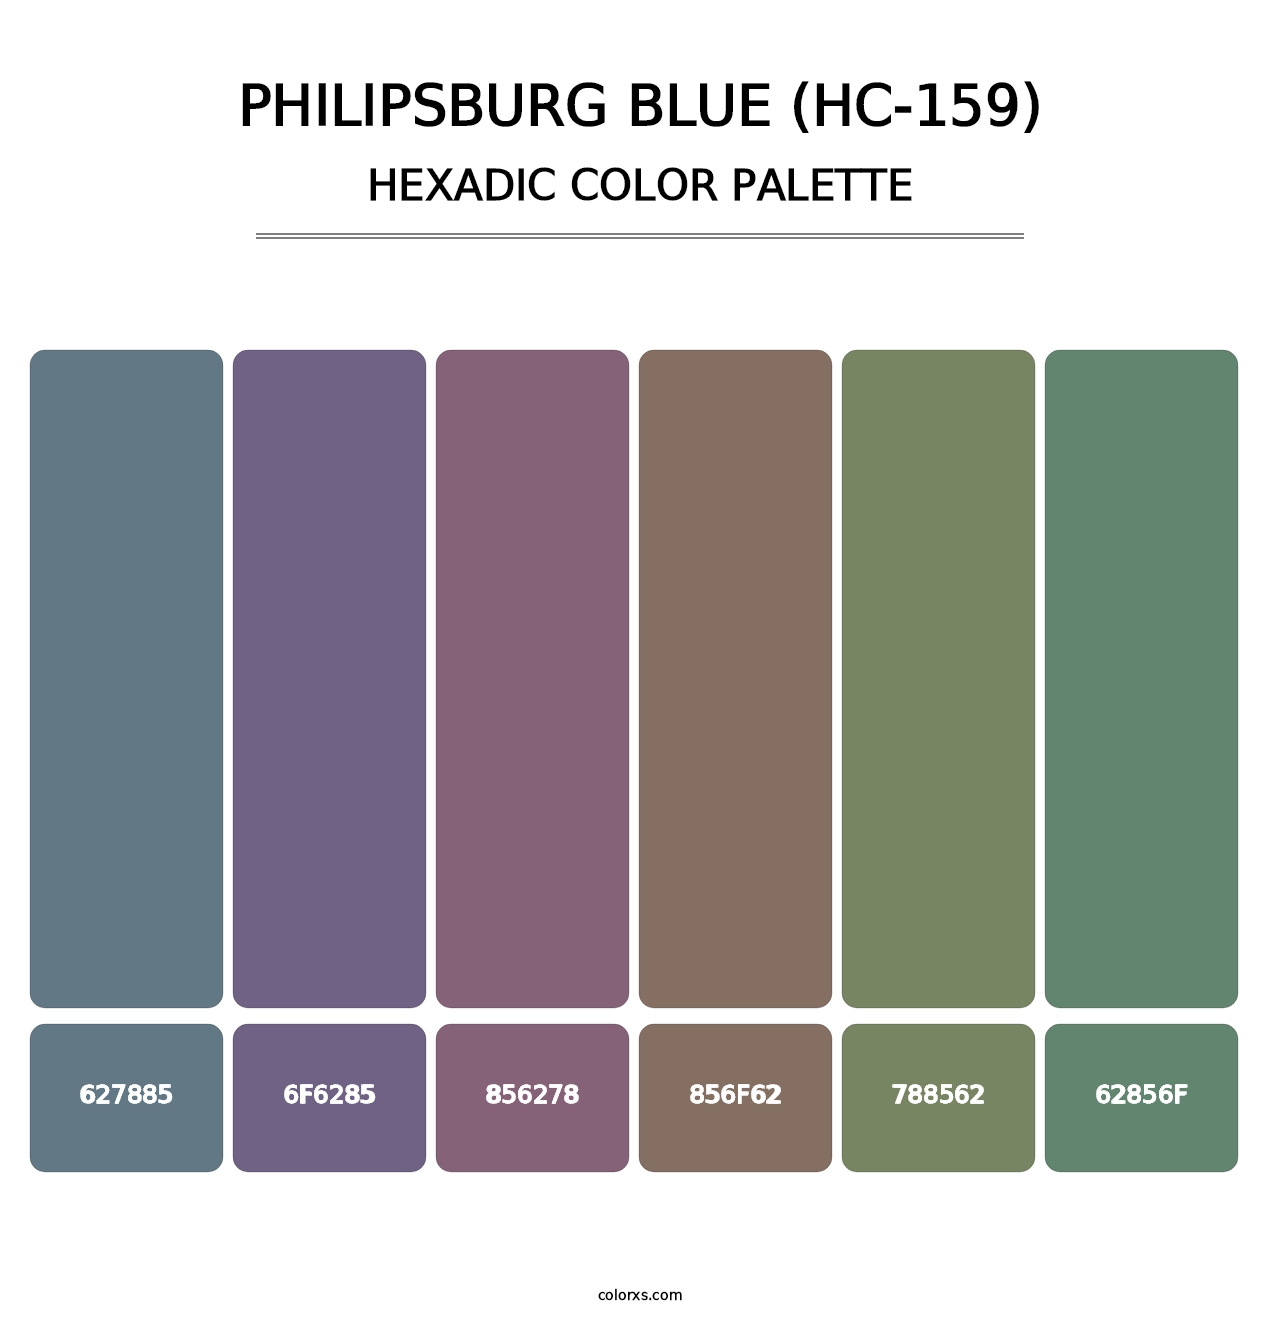 Philipsburg Blue (HC-159) - Hexadic Color Palette